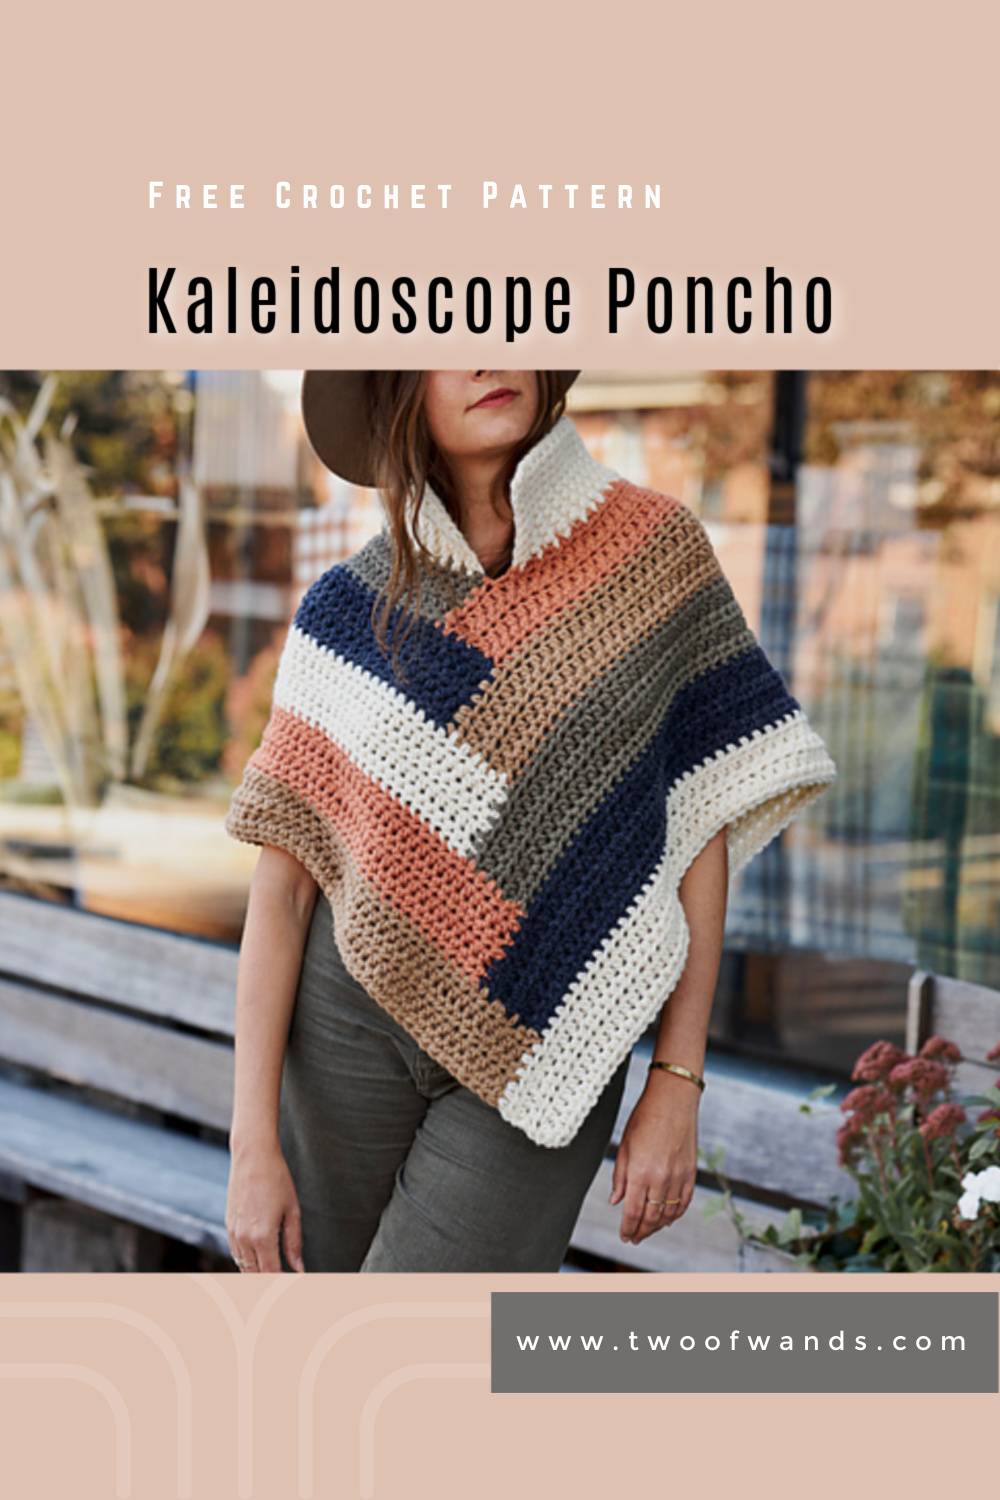 Kaleidoscope Poncho Free Crochet Pattern